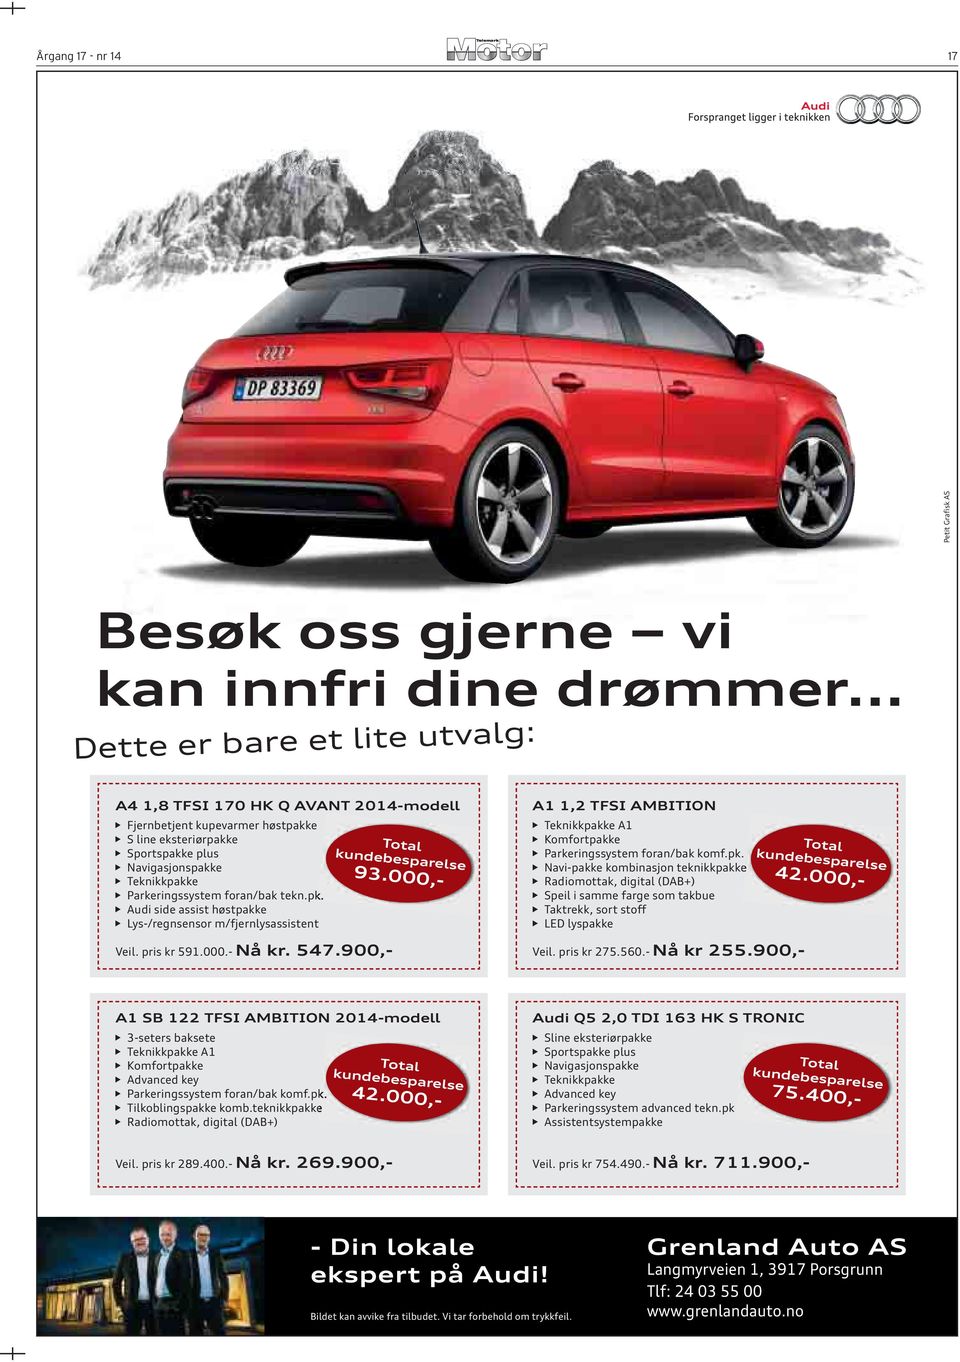 foran/bak tekn.pk. Audi side assist høstpakke Lys-/regnsensor m/fjernlysassistent Veil. pris kr 591.000.- Nå kr. 547.